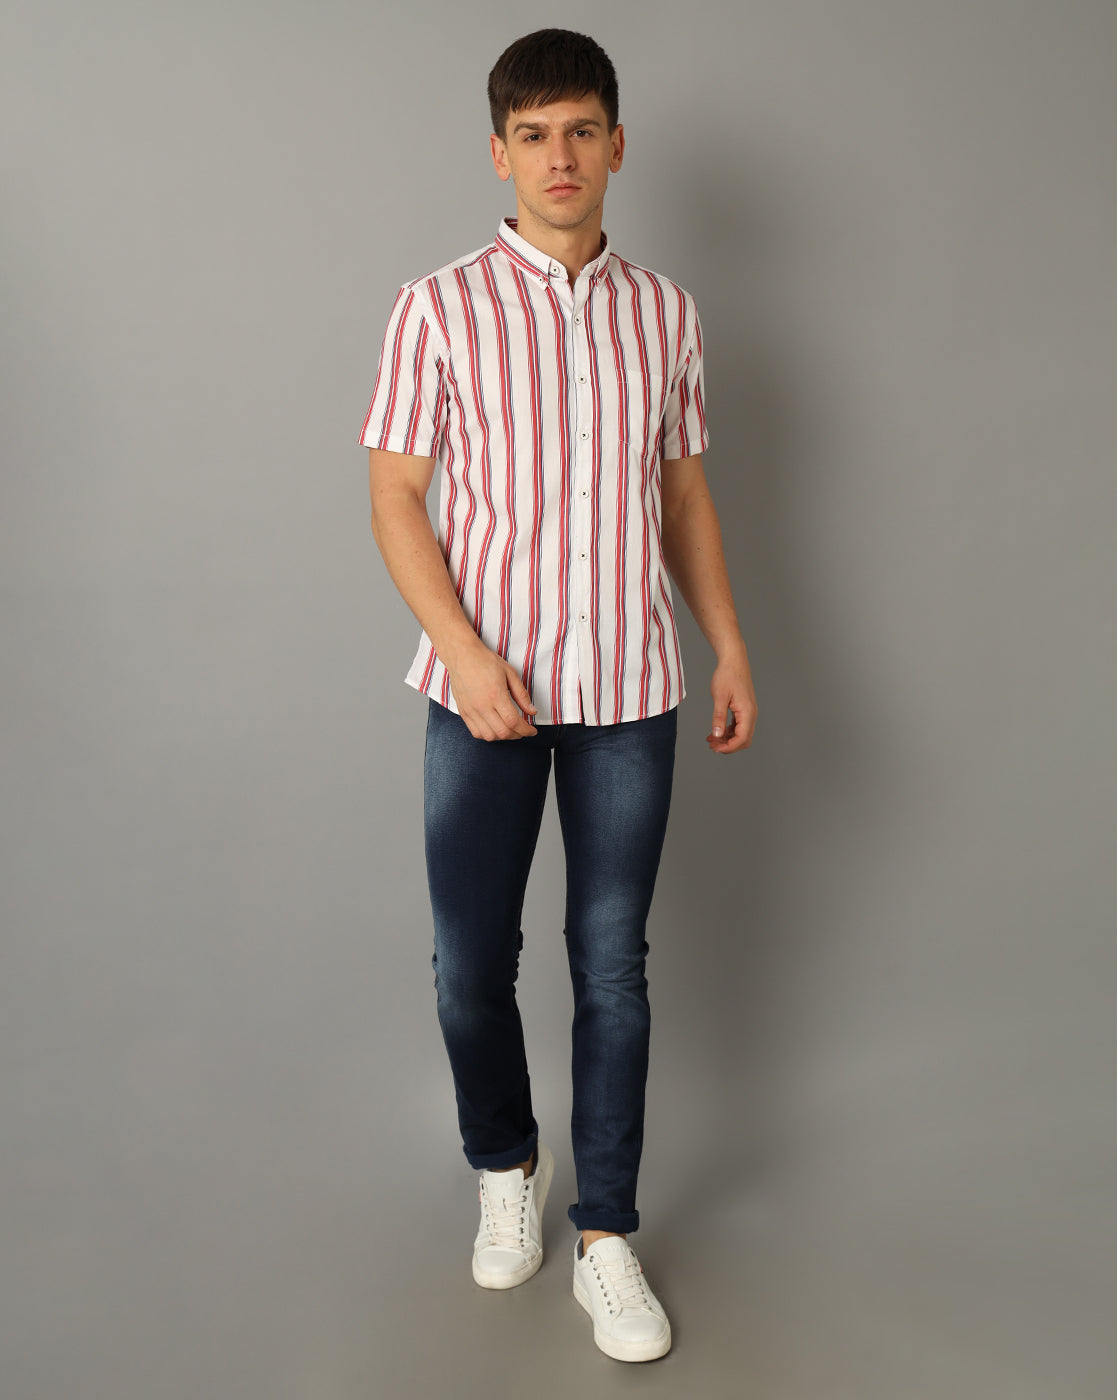 Pink white striped shirt